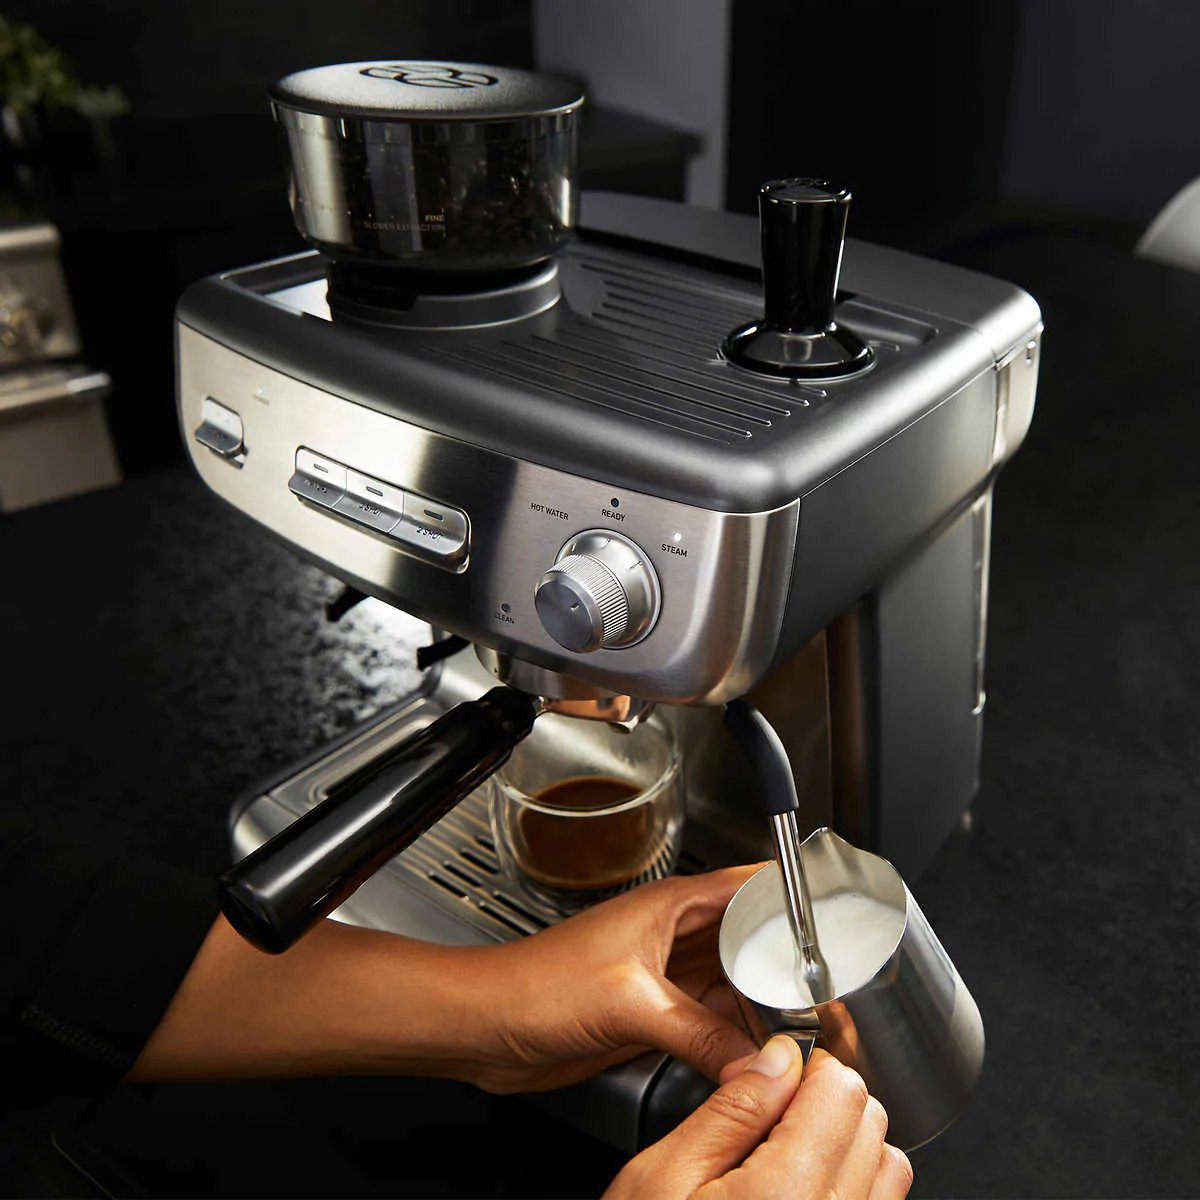 Calphalon PrecisionHeat Espresso Machine with Burr Mill Grinder